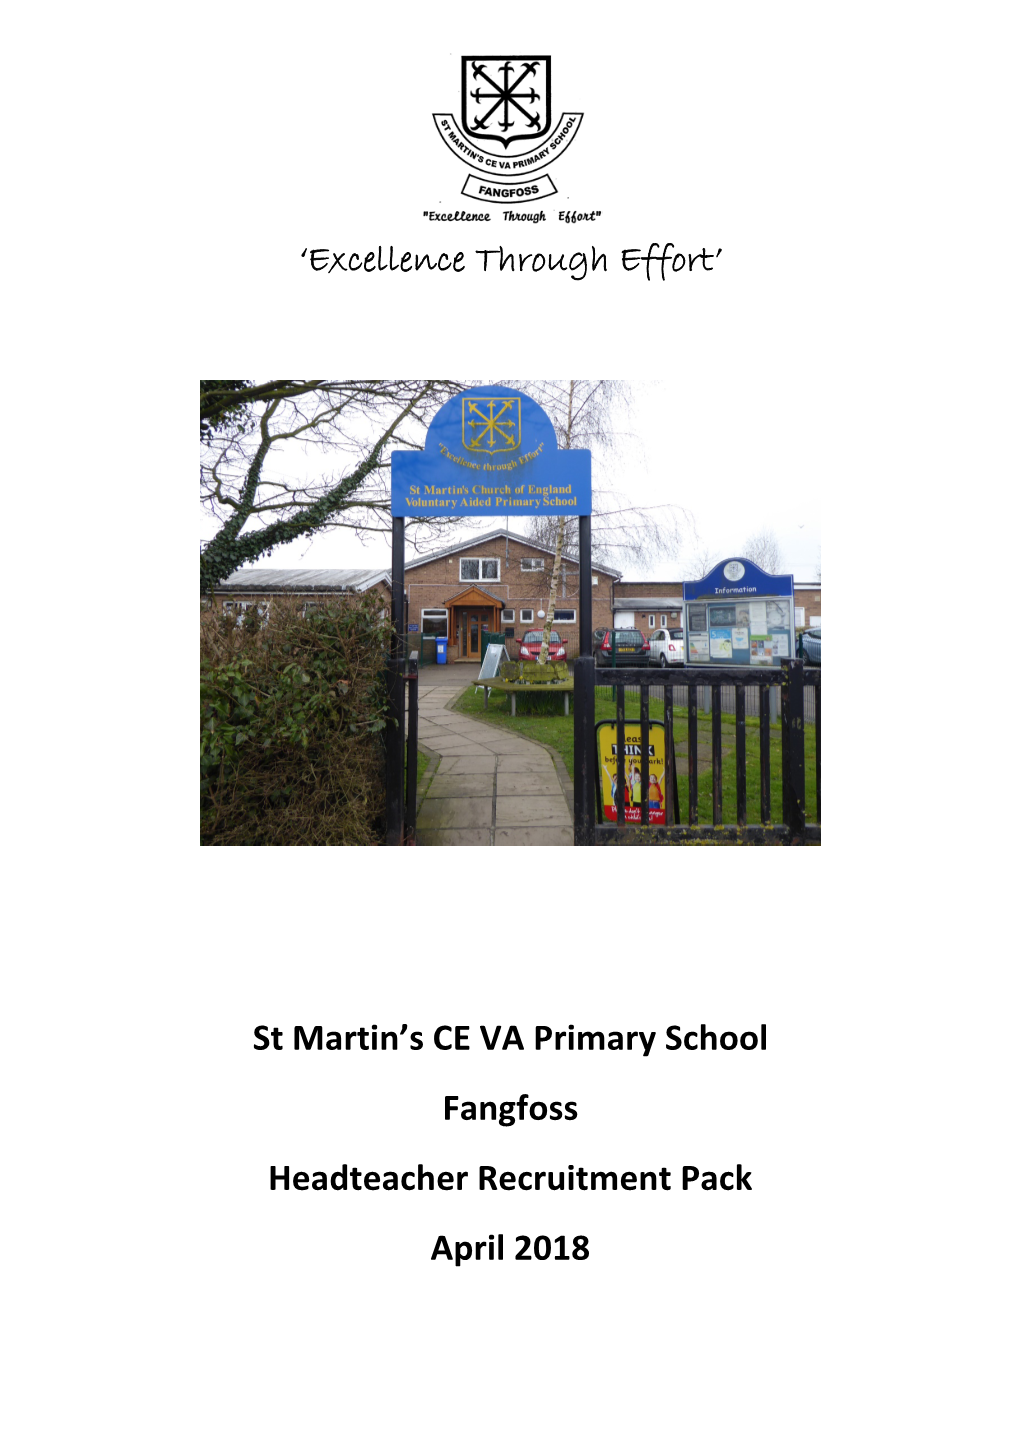 St Martin's CE VA Primary School Fangfoss